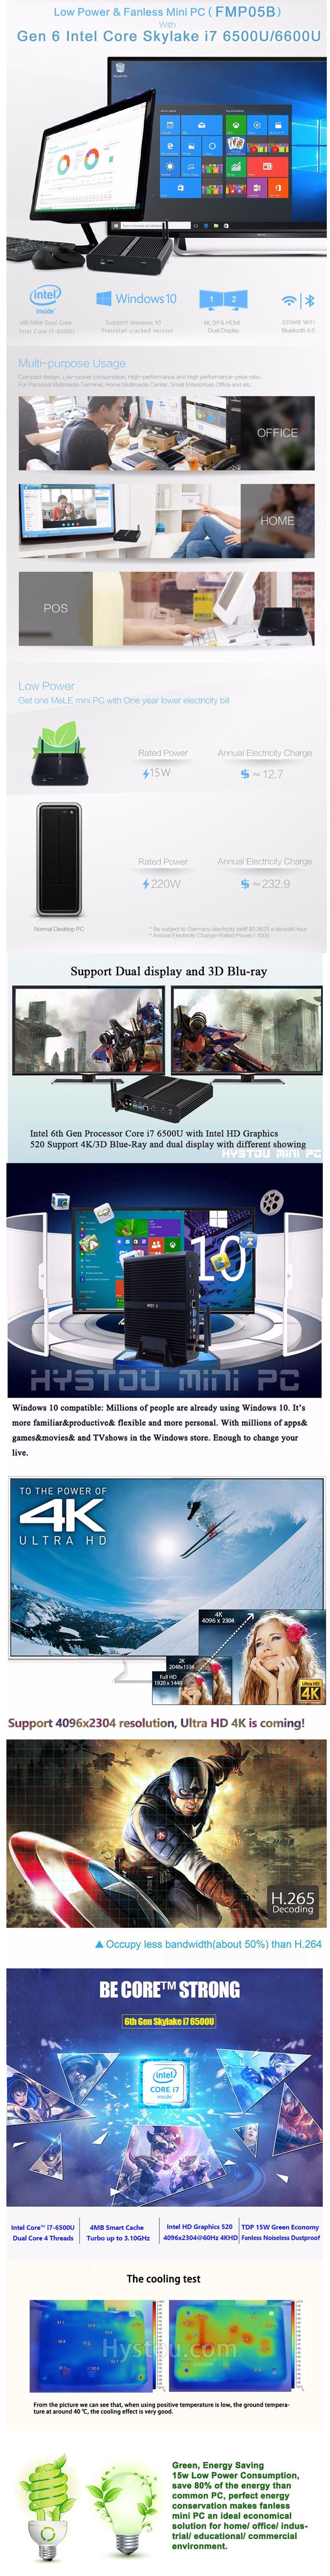 HYSTOU-FMP05B-Mini-PC-i7-6500U-6-Gen-8GB128GB8GB256GB-Quad-Core-Win10-DDR4-Intel-HD-Graphics-520-31G-1511495